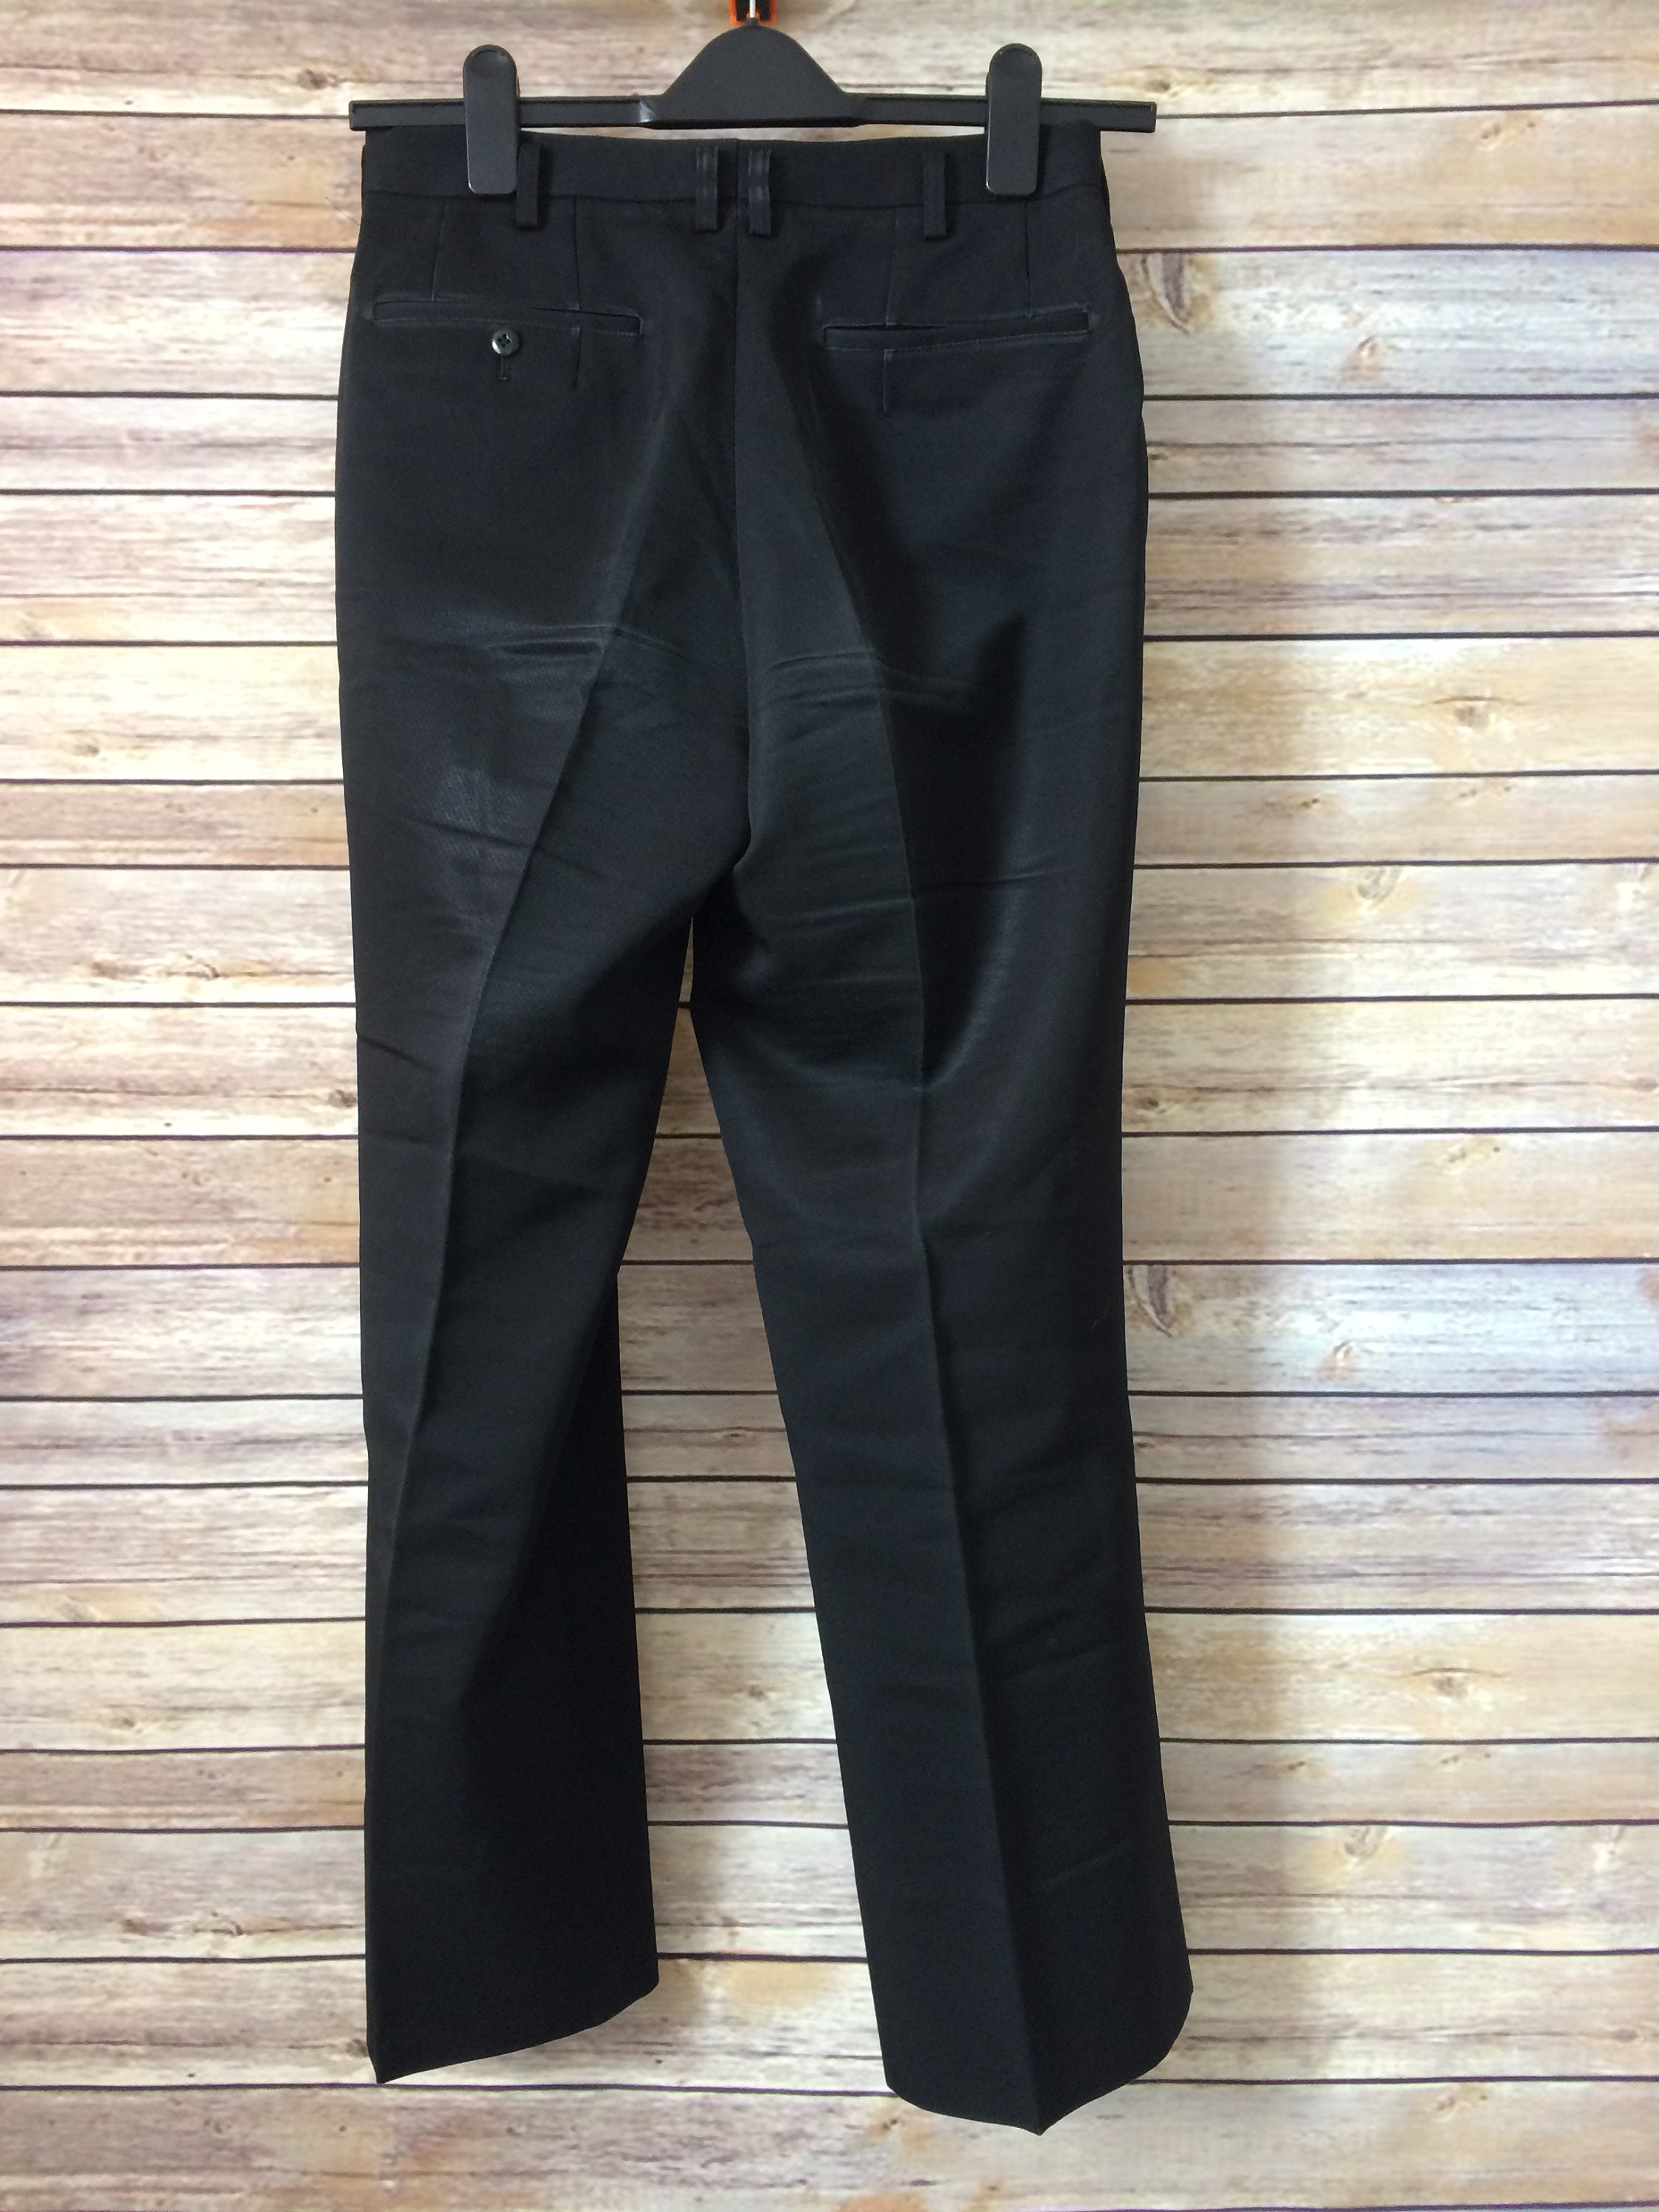 Authentic Japanese School Boy Uniform Black Trousers Waist - Etsy UK